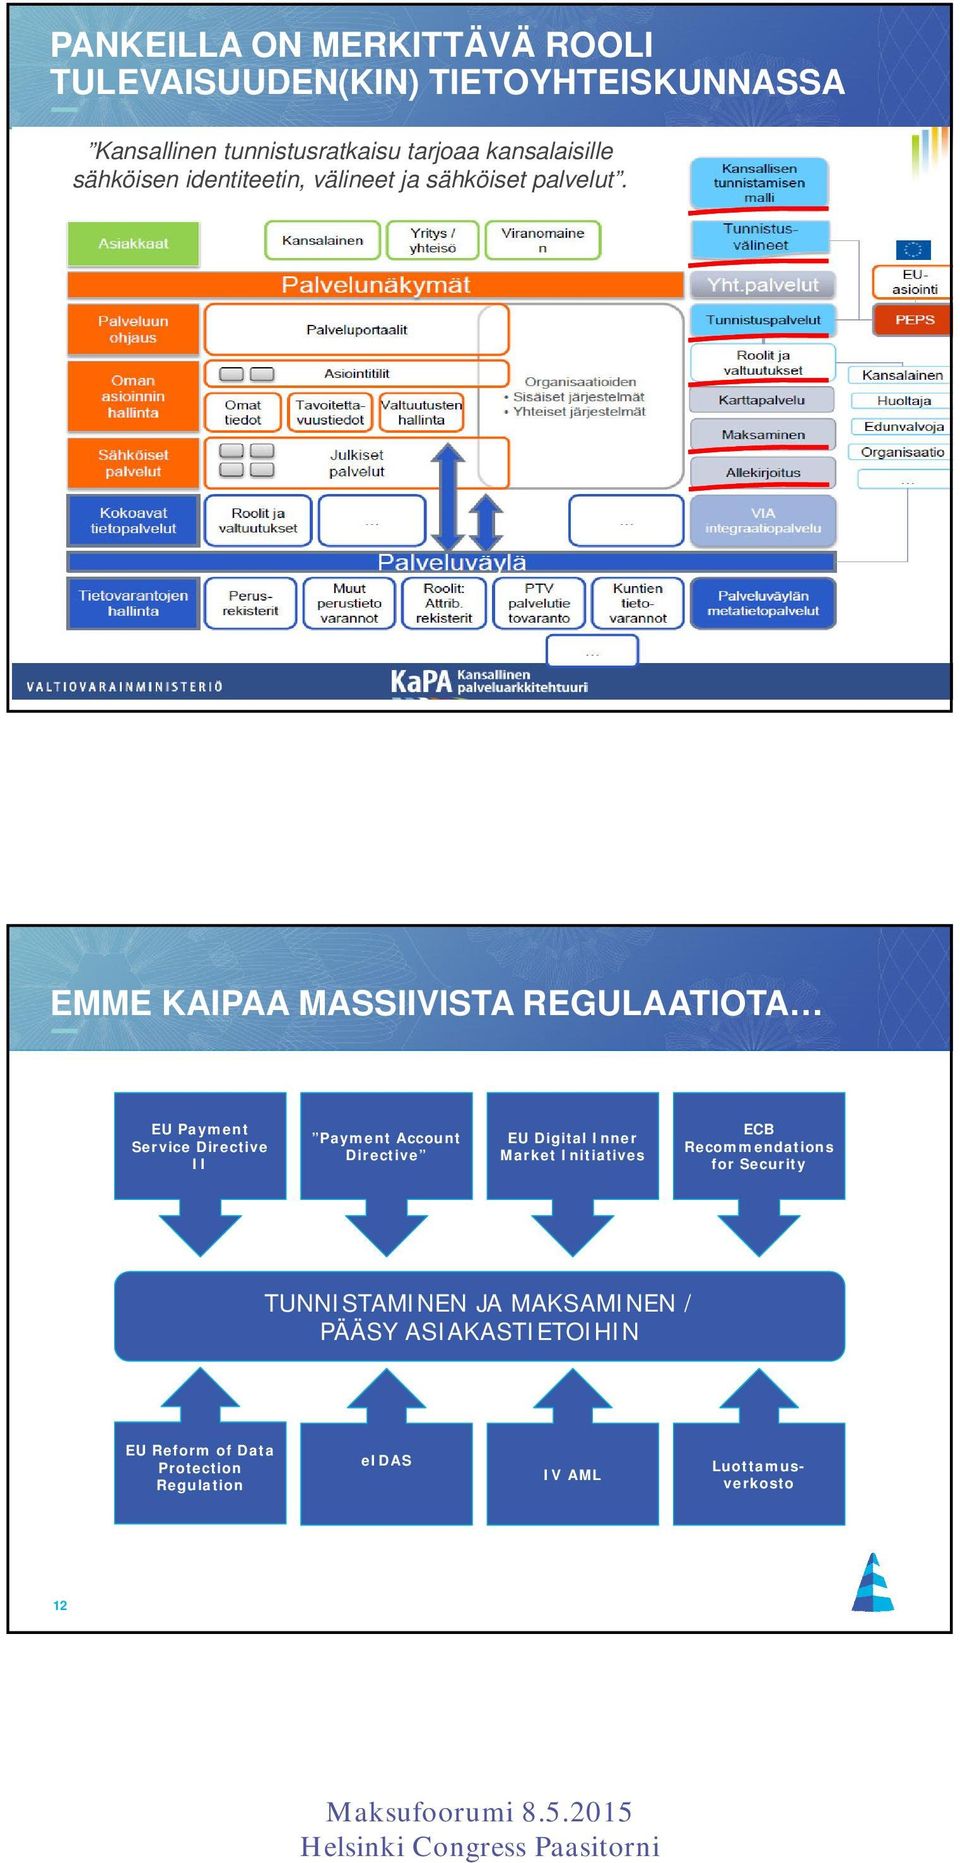 11 EMME KAIPAA MASSIIVISTA REGULAATIOTA EU Payment Service Directive II Payment Account Directive EU Digital Inner